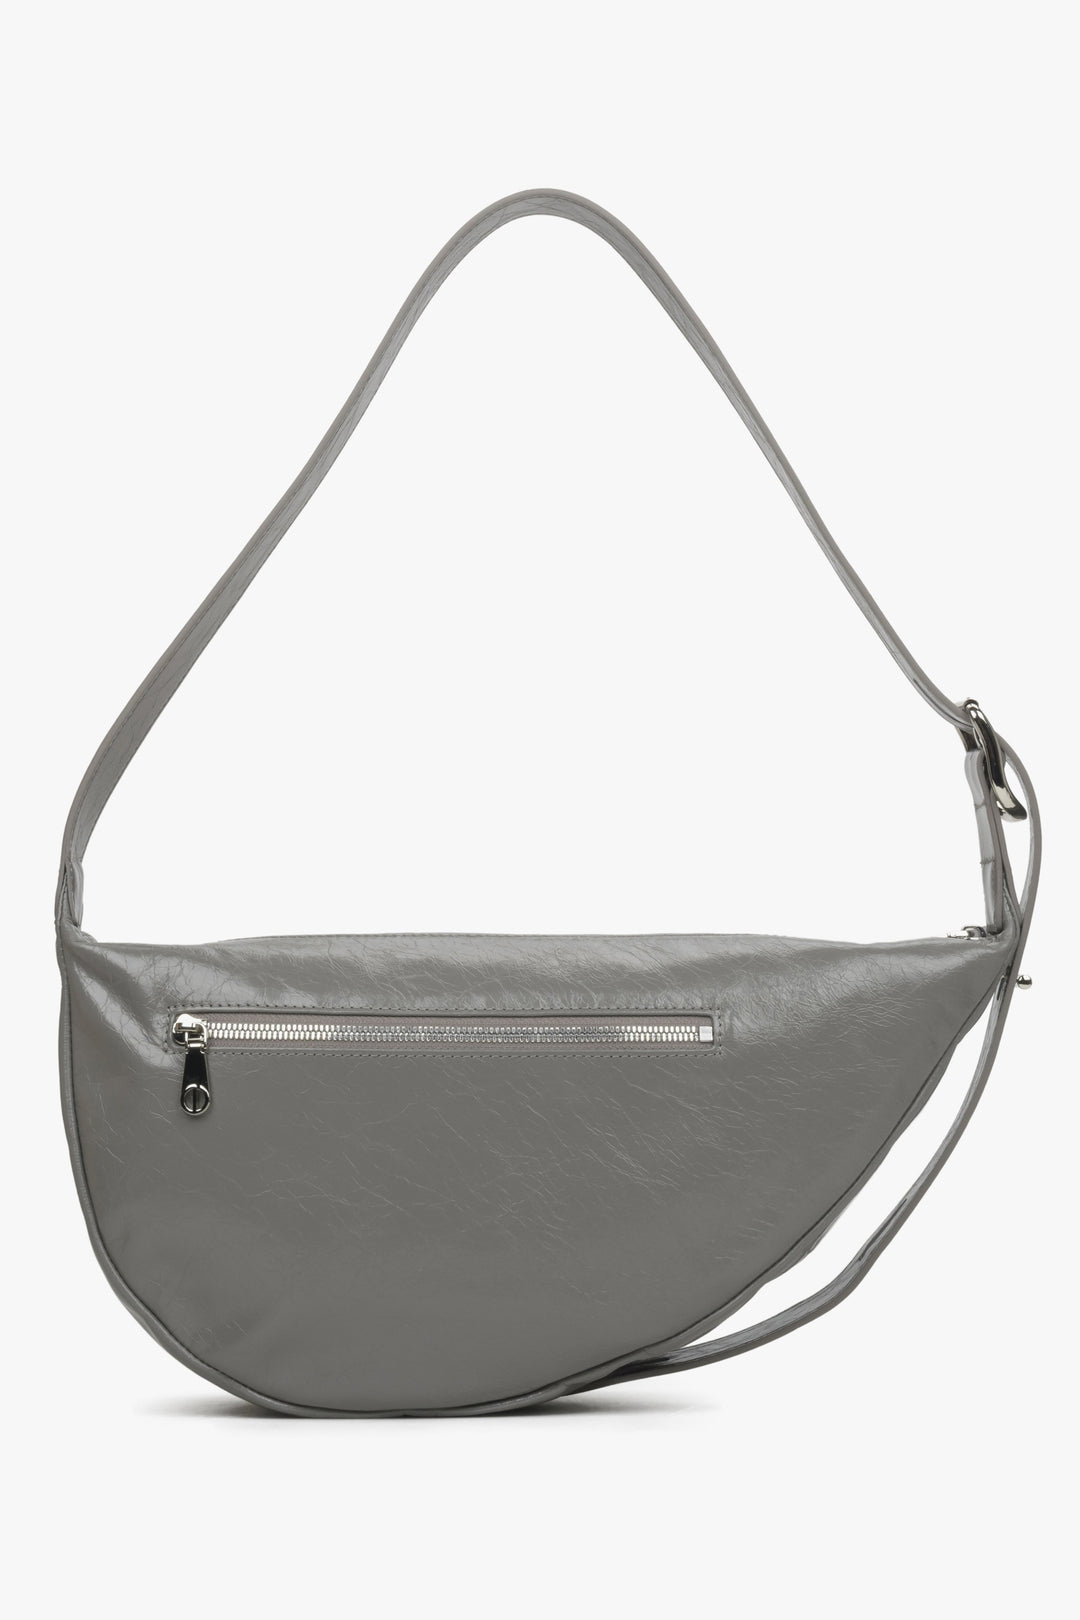 Women's grey leather Estro shoulder bag - back view of the model.